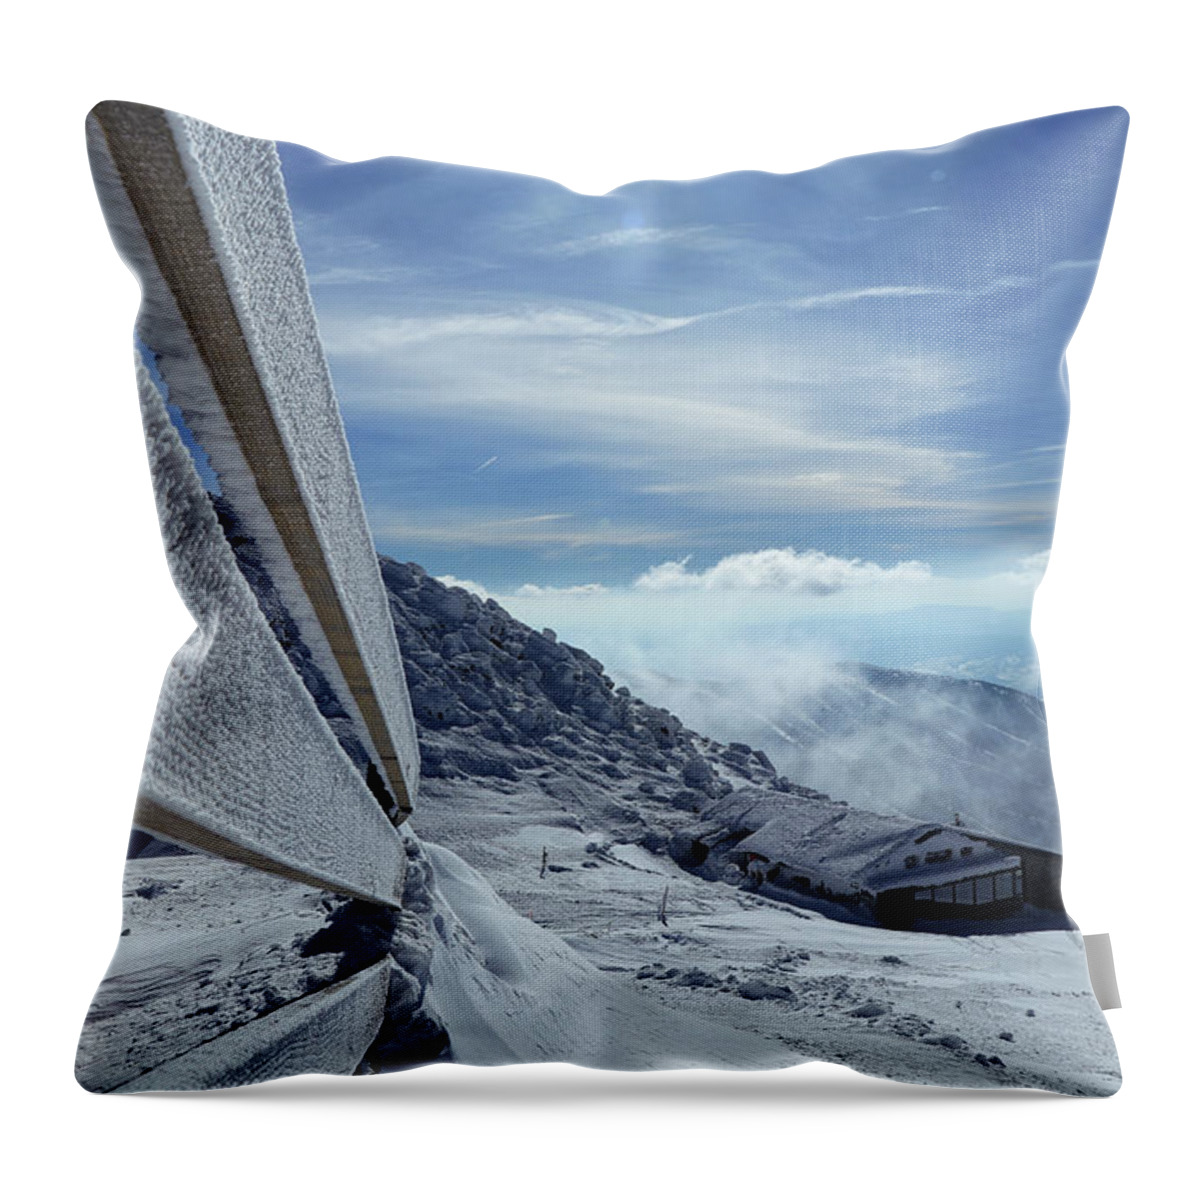 Fairytale Throw Pillow featuring the photograph Alpine cottage - Chopok mountain, Slovakia by Vaclav Sonnek